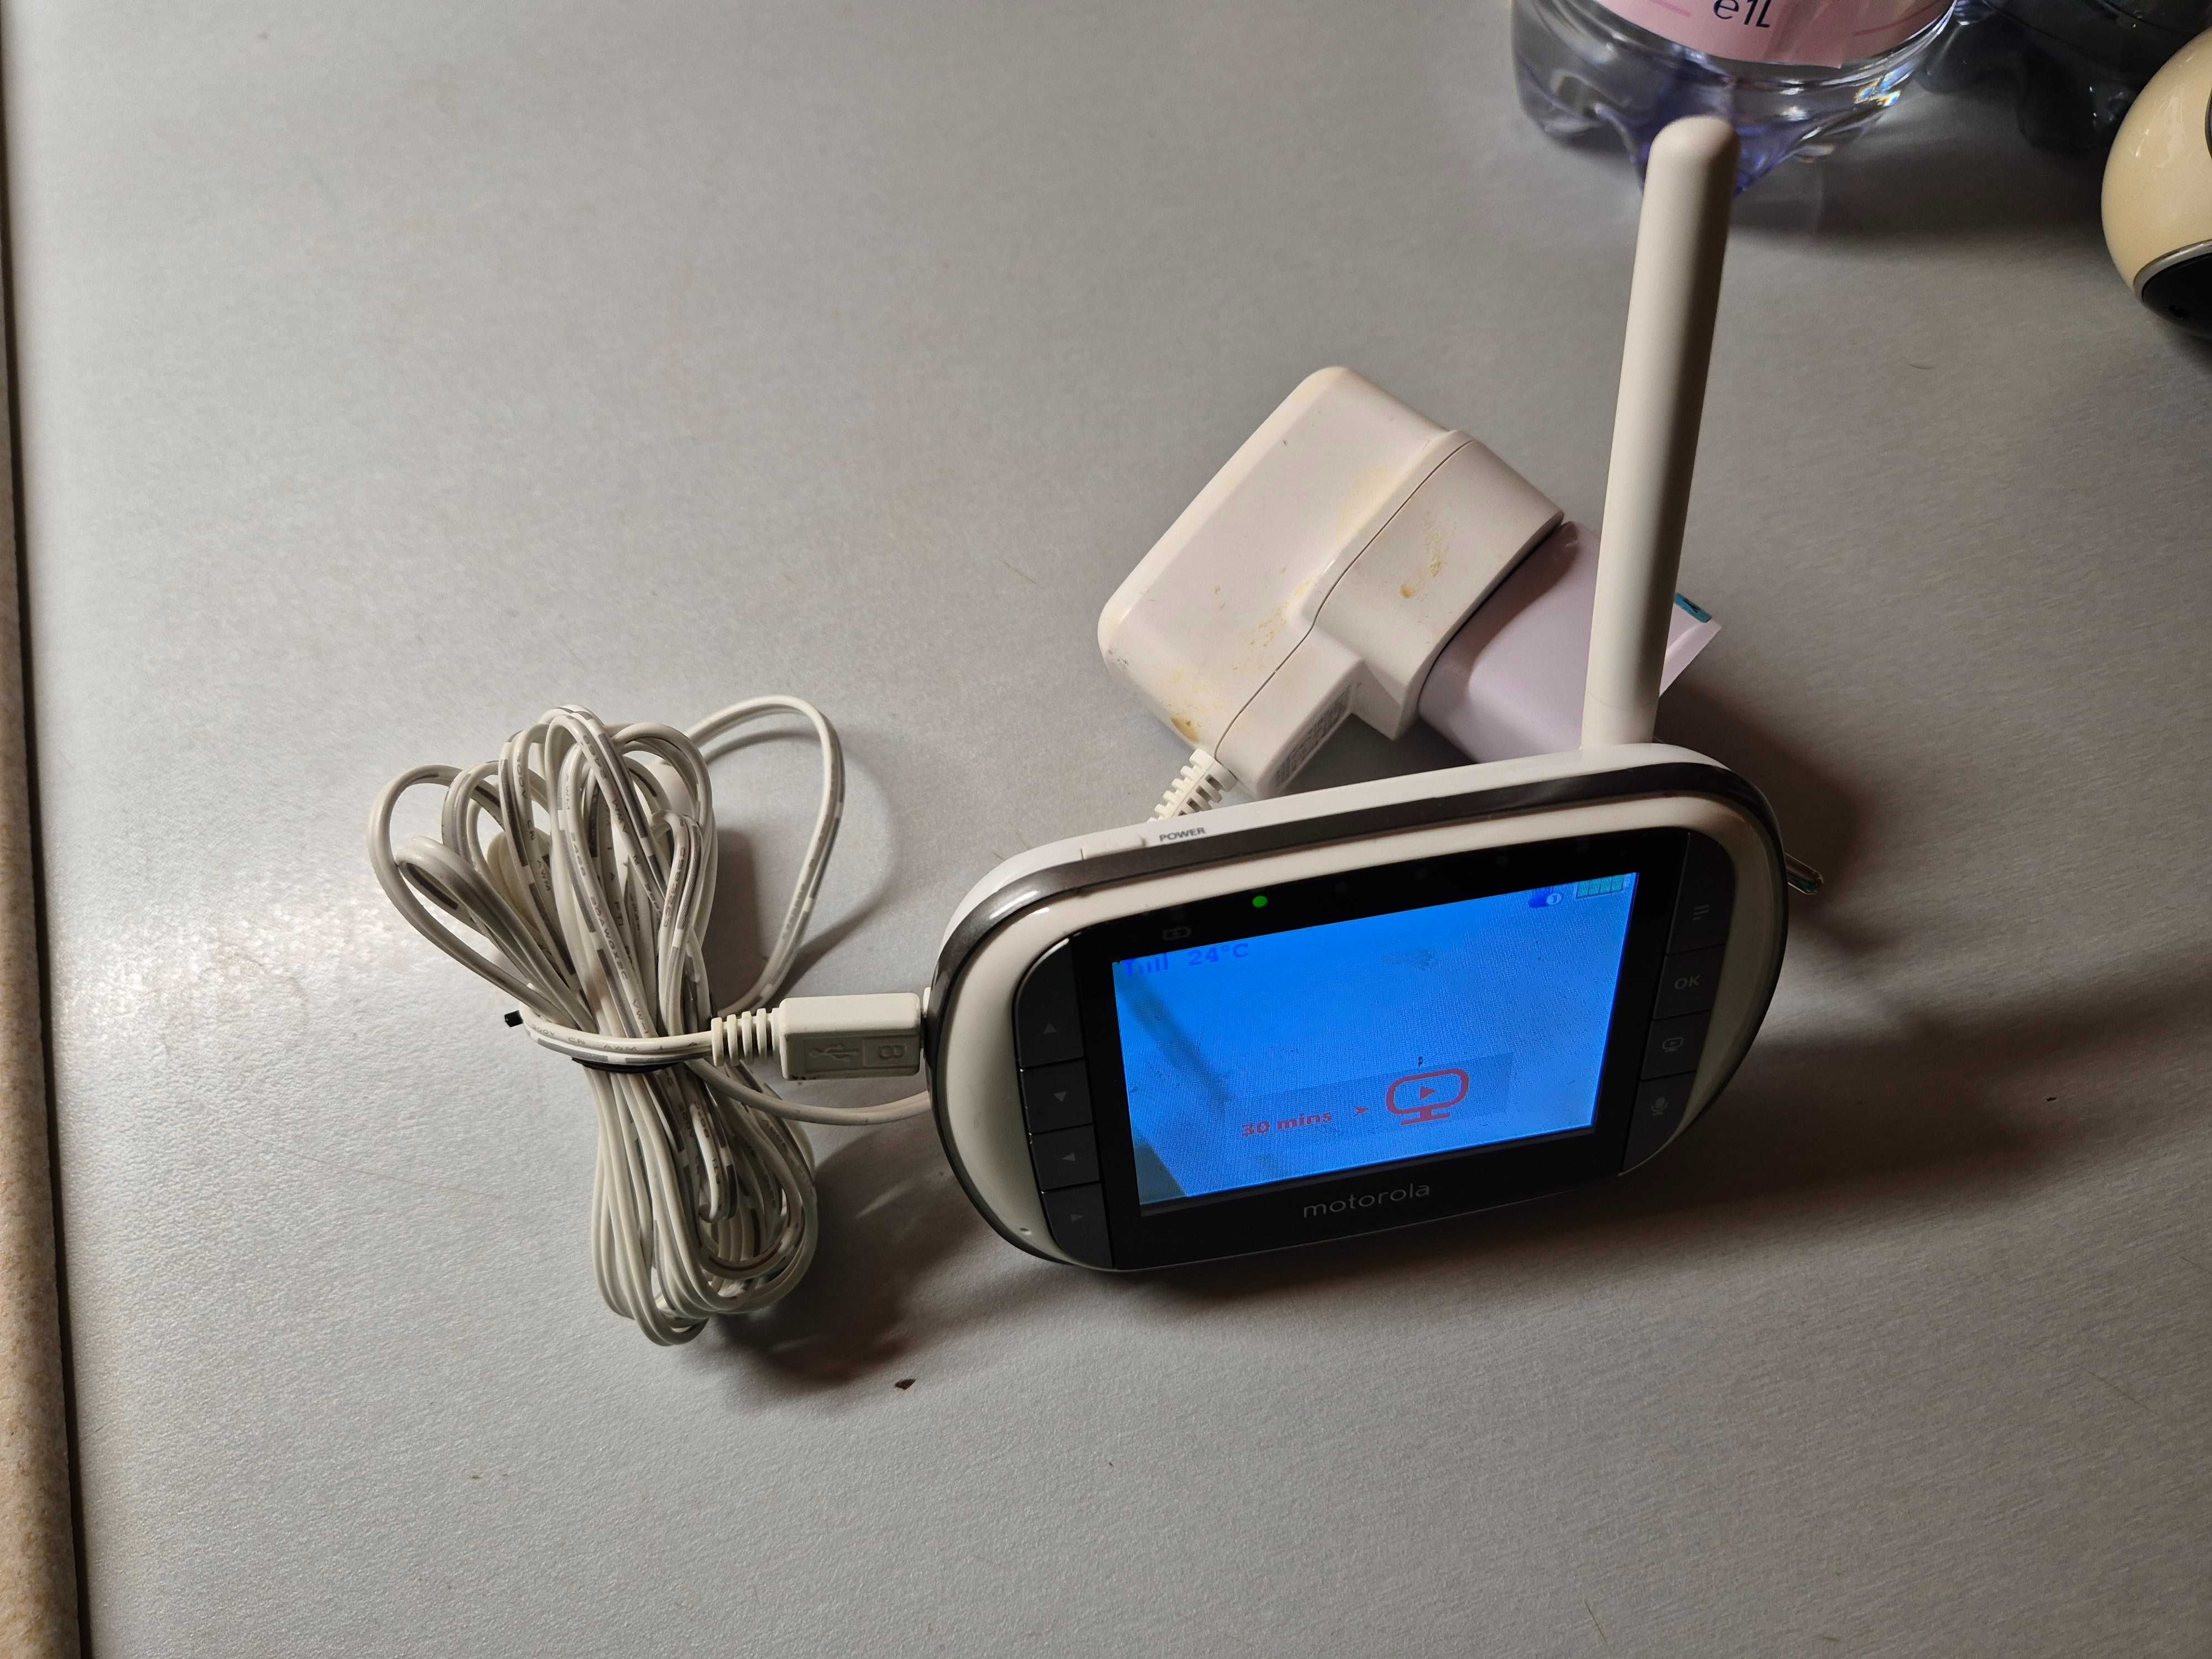 Video Baby Monitor Motorola